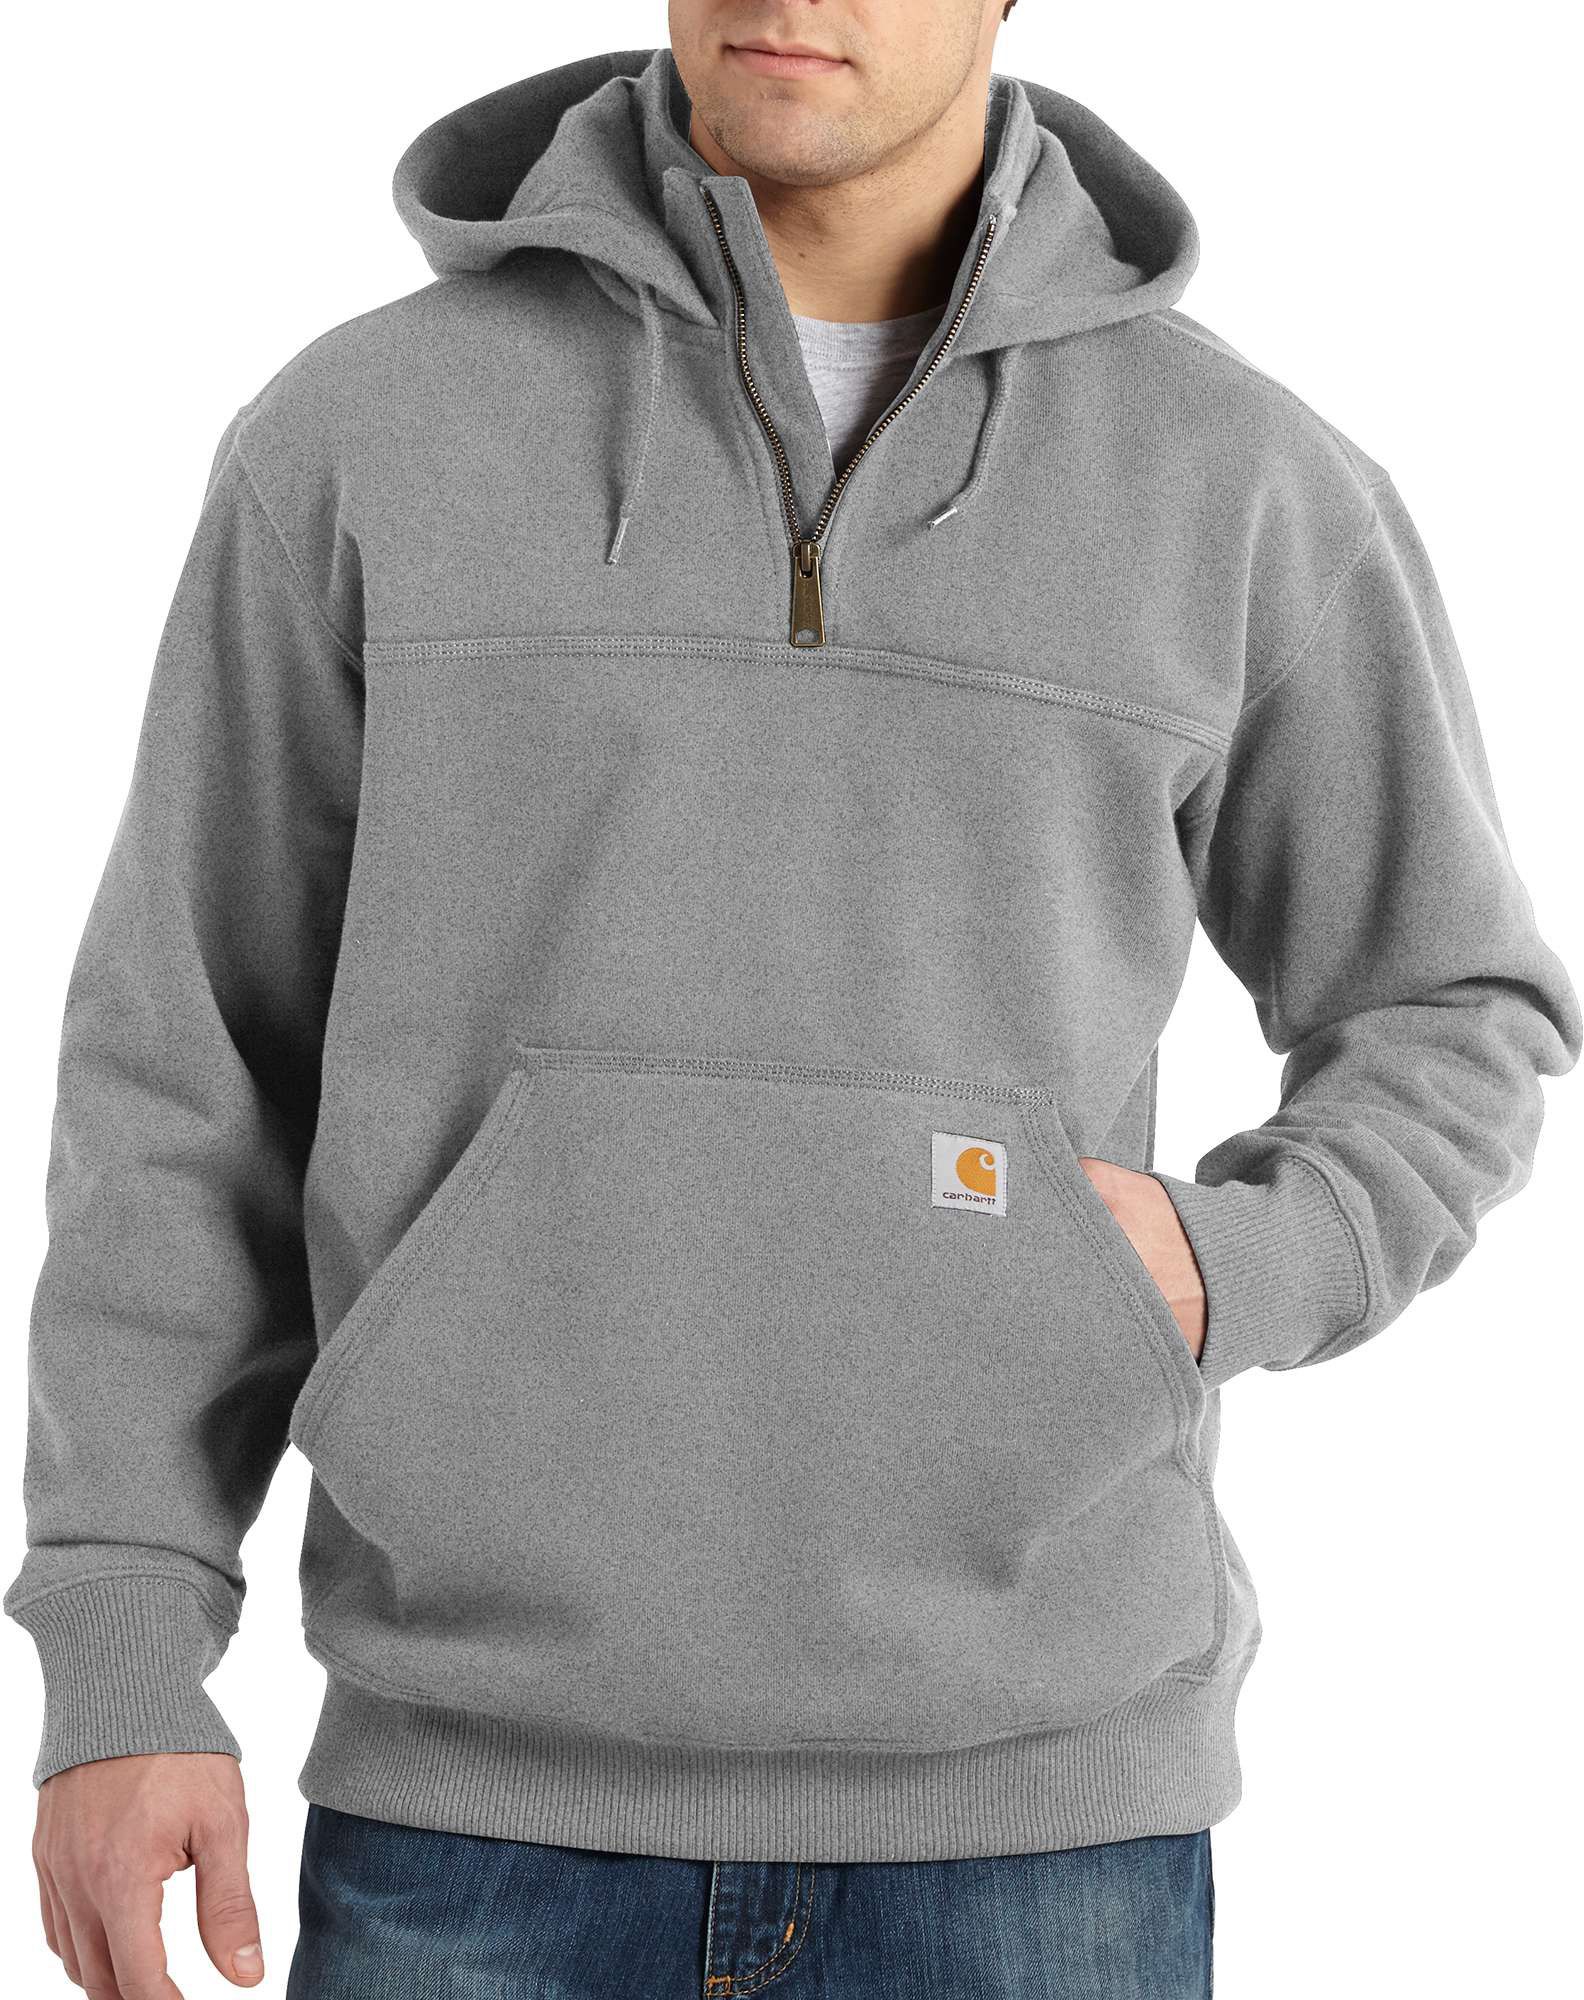 mens small carhartt hoodie